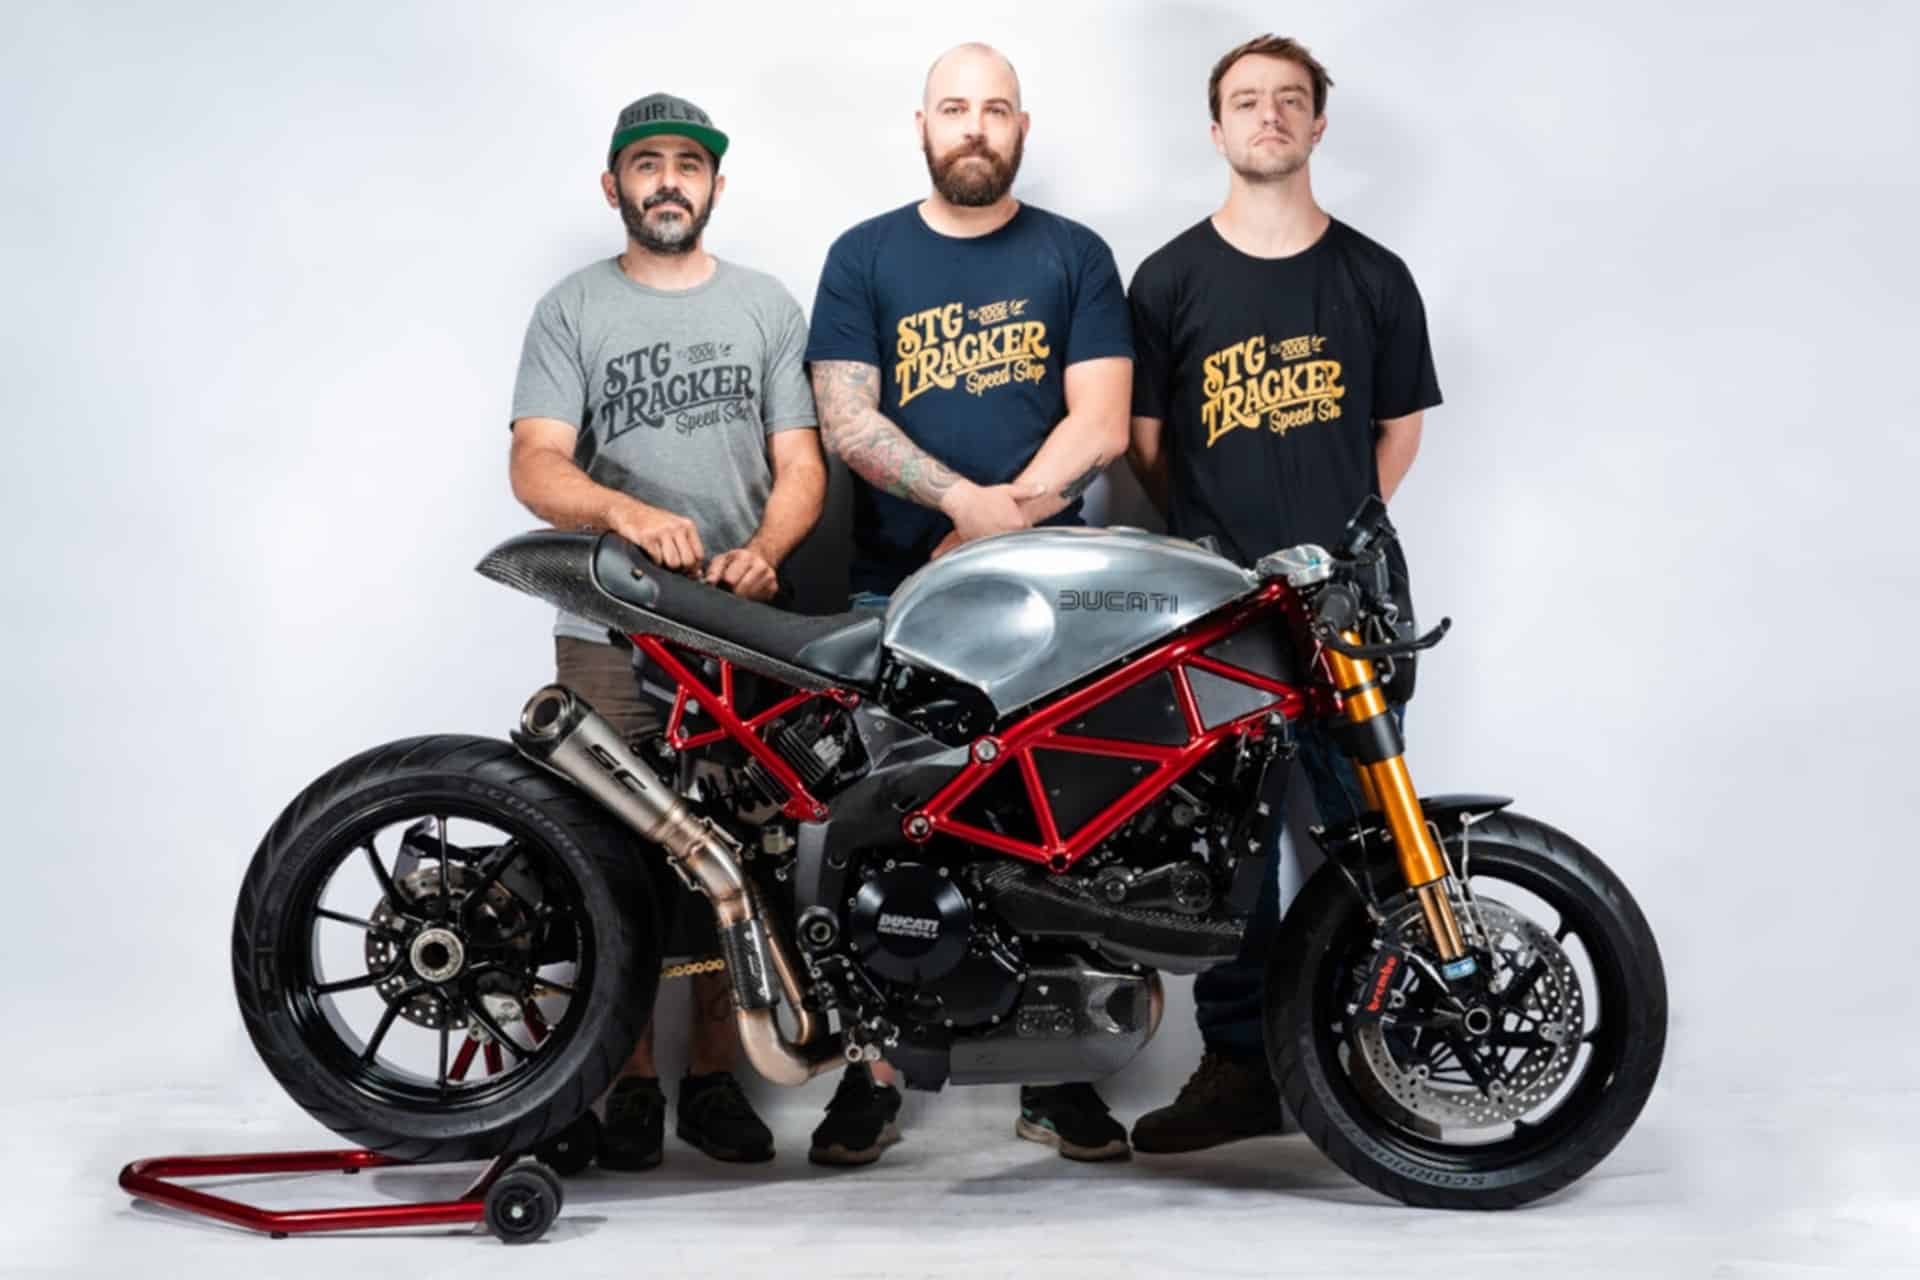 Ducati Multistrada Café Racer by STG Tracker